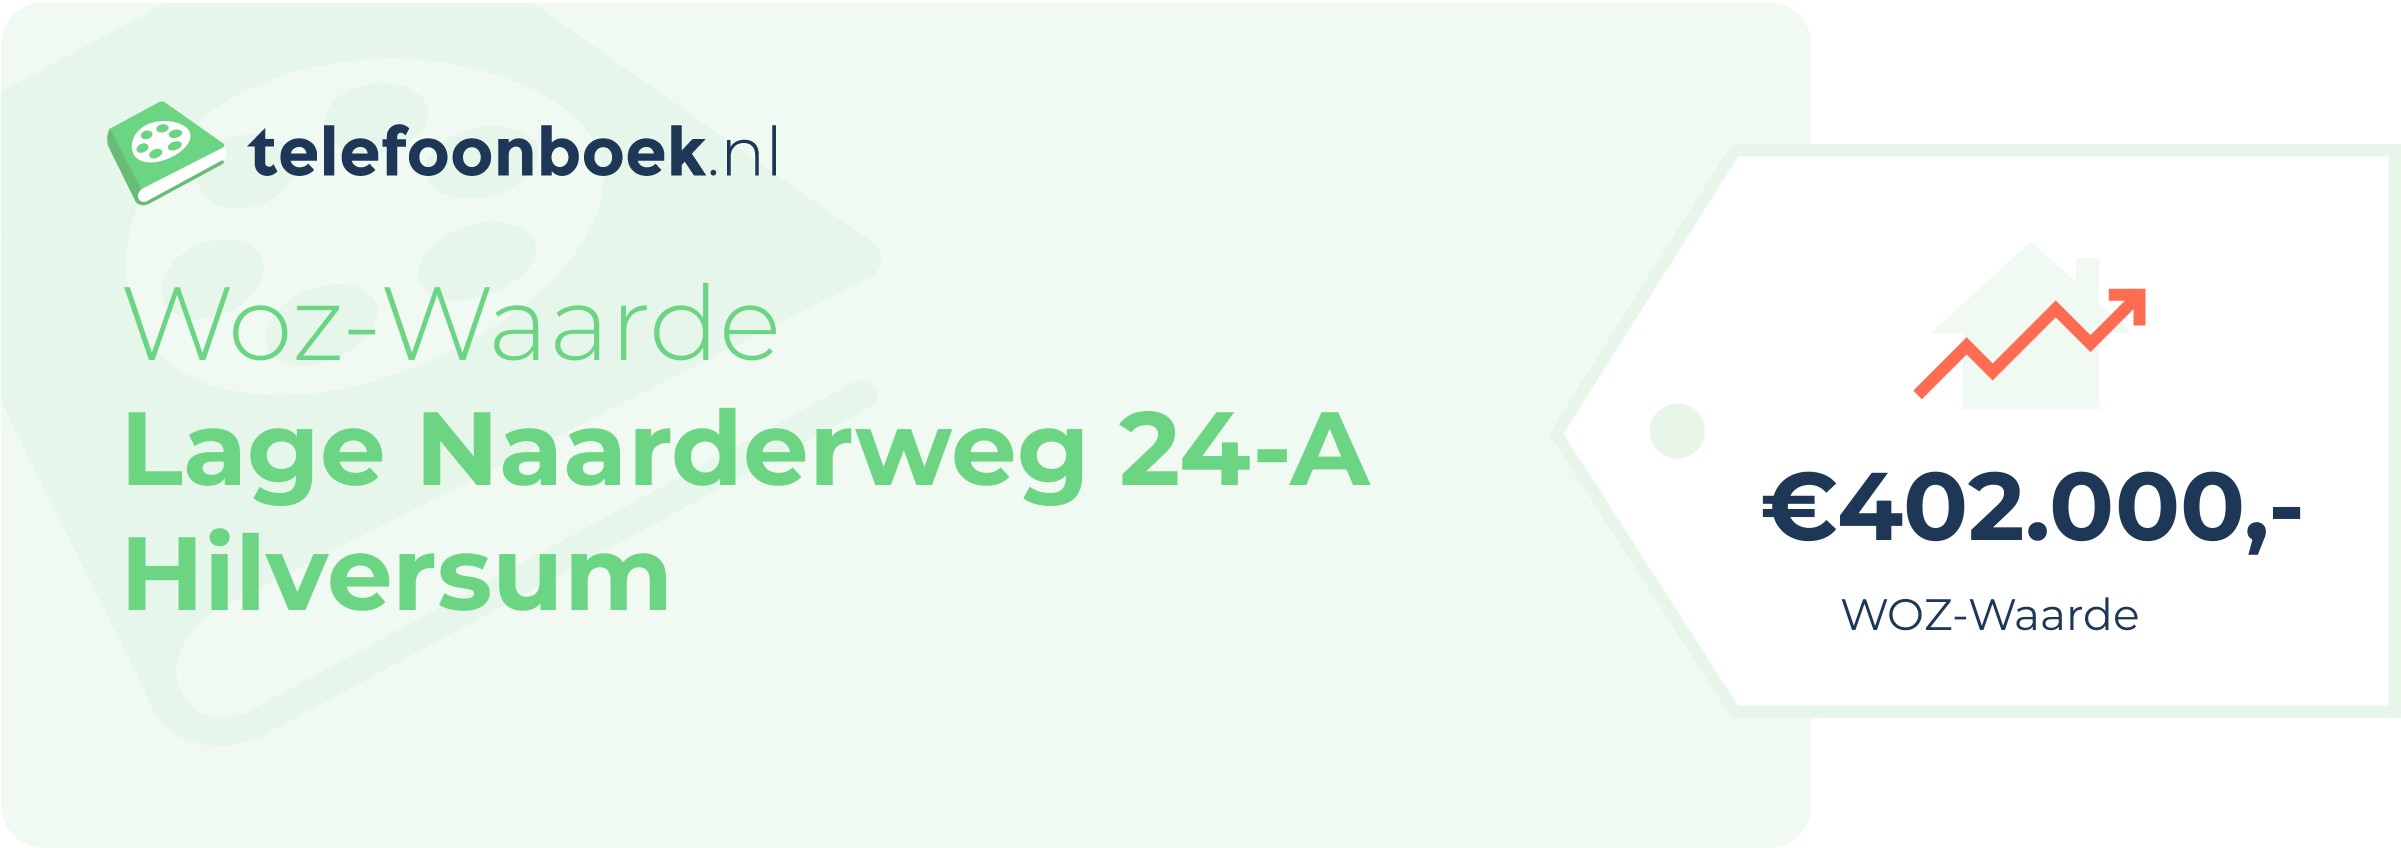 WOZ-waarde Lage Naarderweg 24-A Hilversum